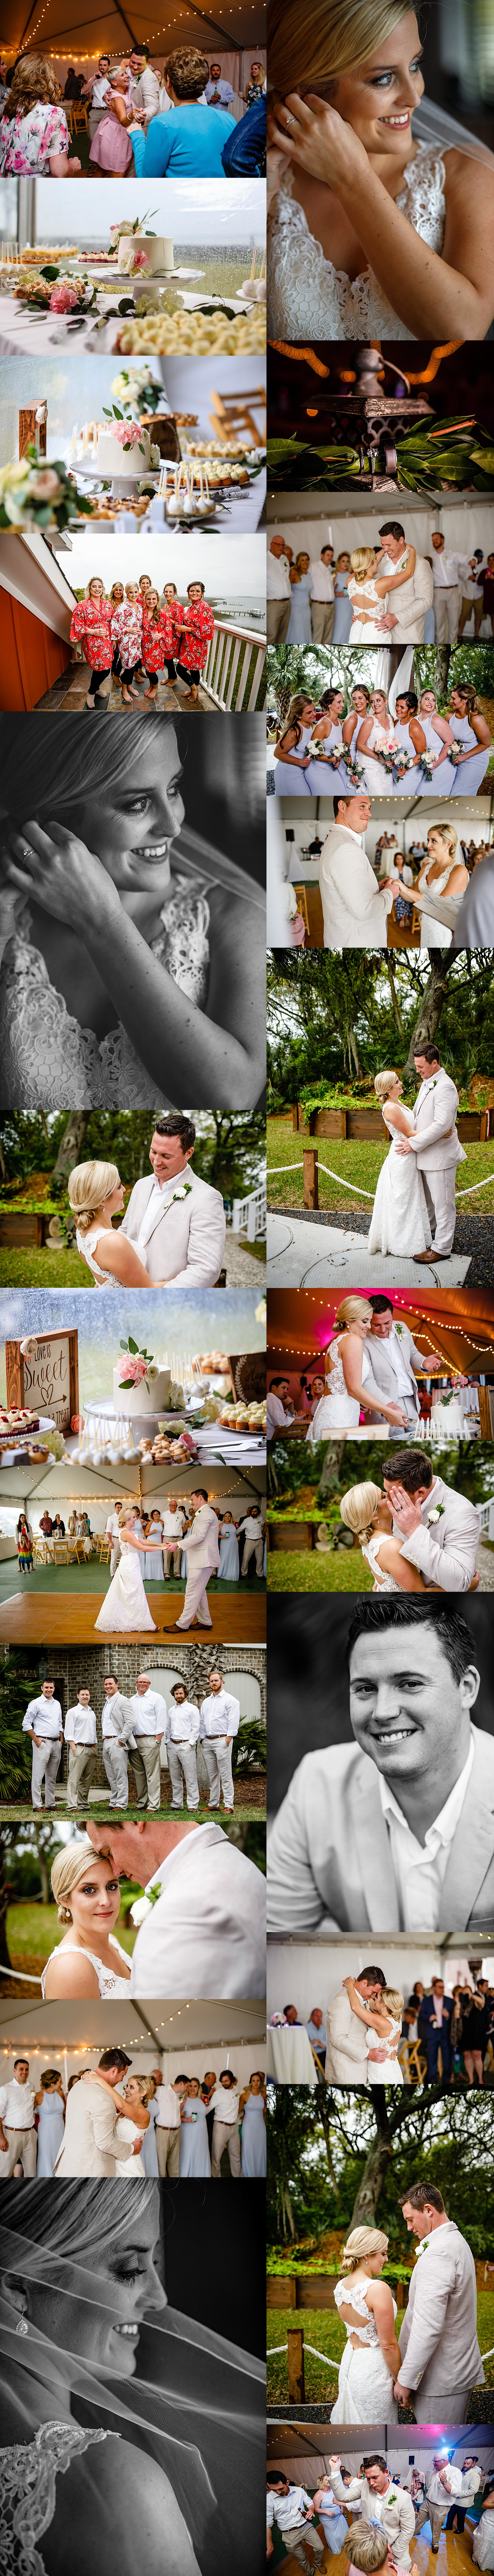 Amy&Colin, Regatta Inn, Folly Beach, Wedding, Folly Beach Wedding, Cory Lee Photography | Charleston Wedding Photographer